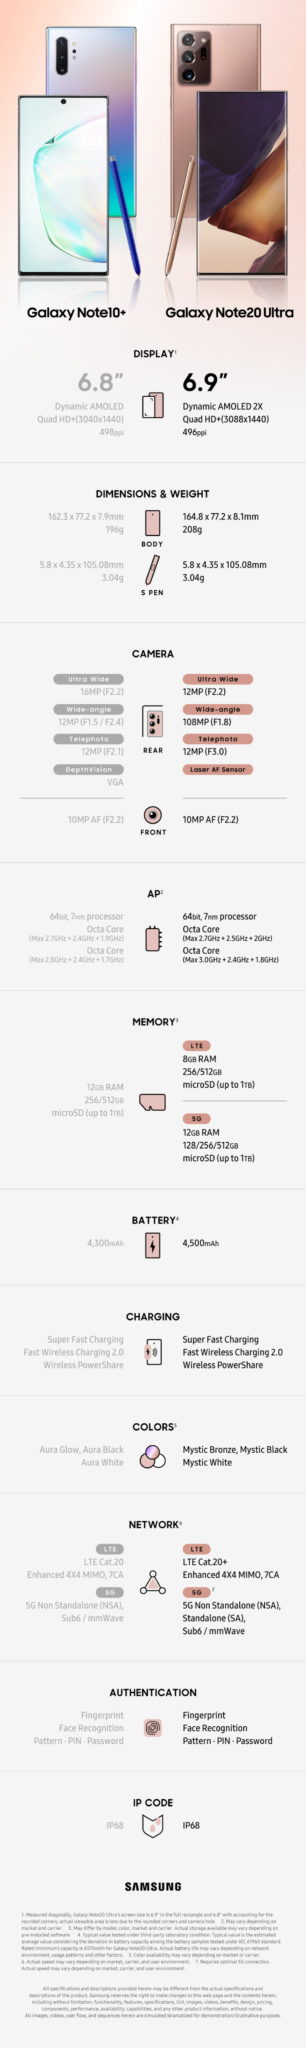 [Infographic] Spec Comparison: the Galaxy Note20 Ultra vs. the Galaxy Note10+